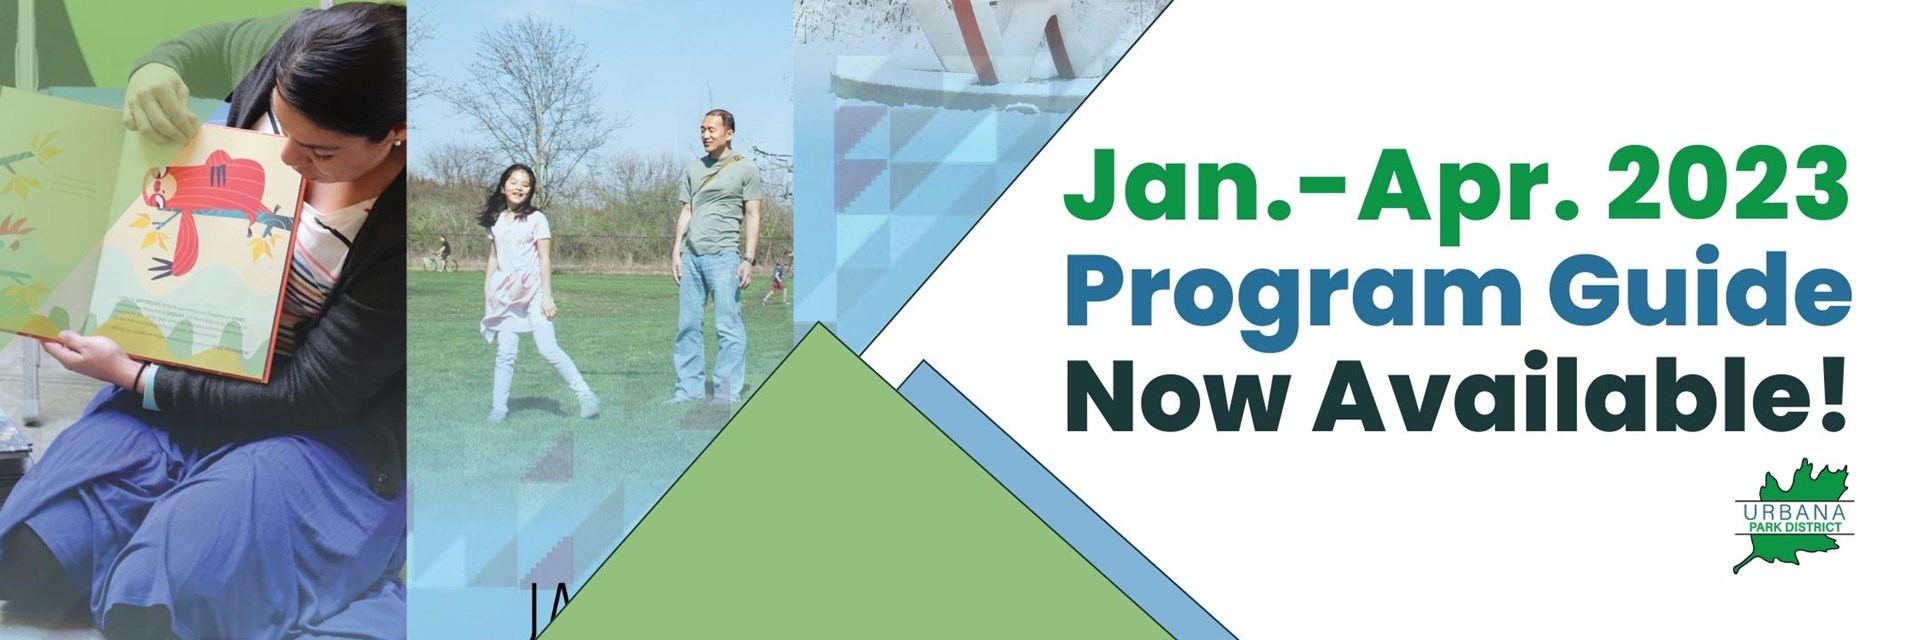 Jan.-Apr. 2023 Program Guide Now Available!